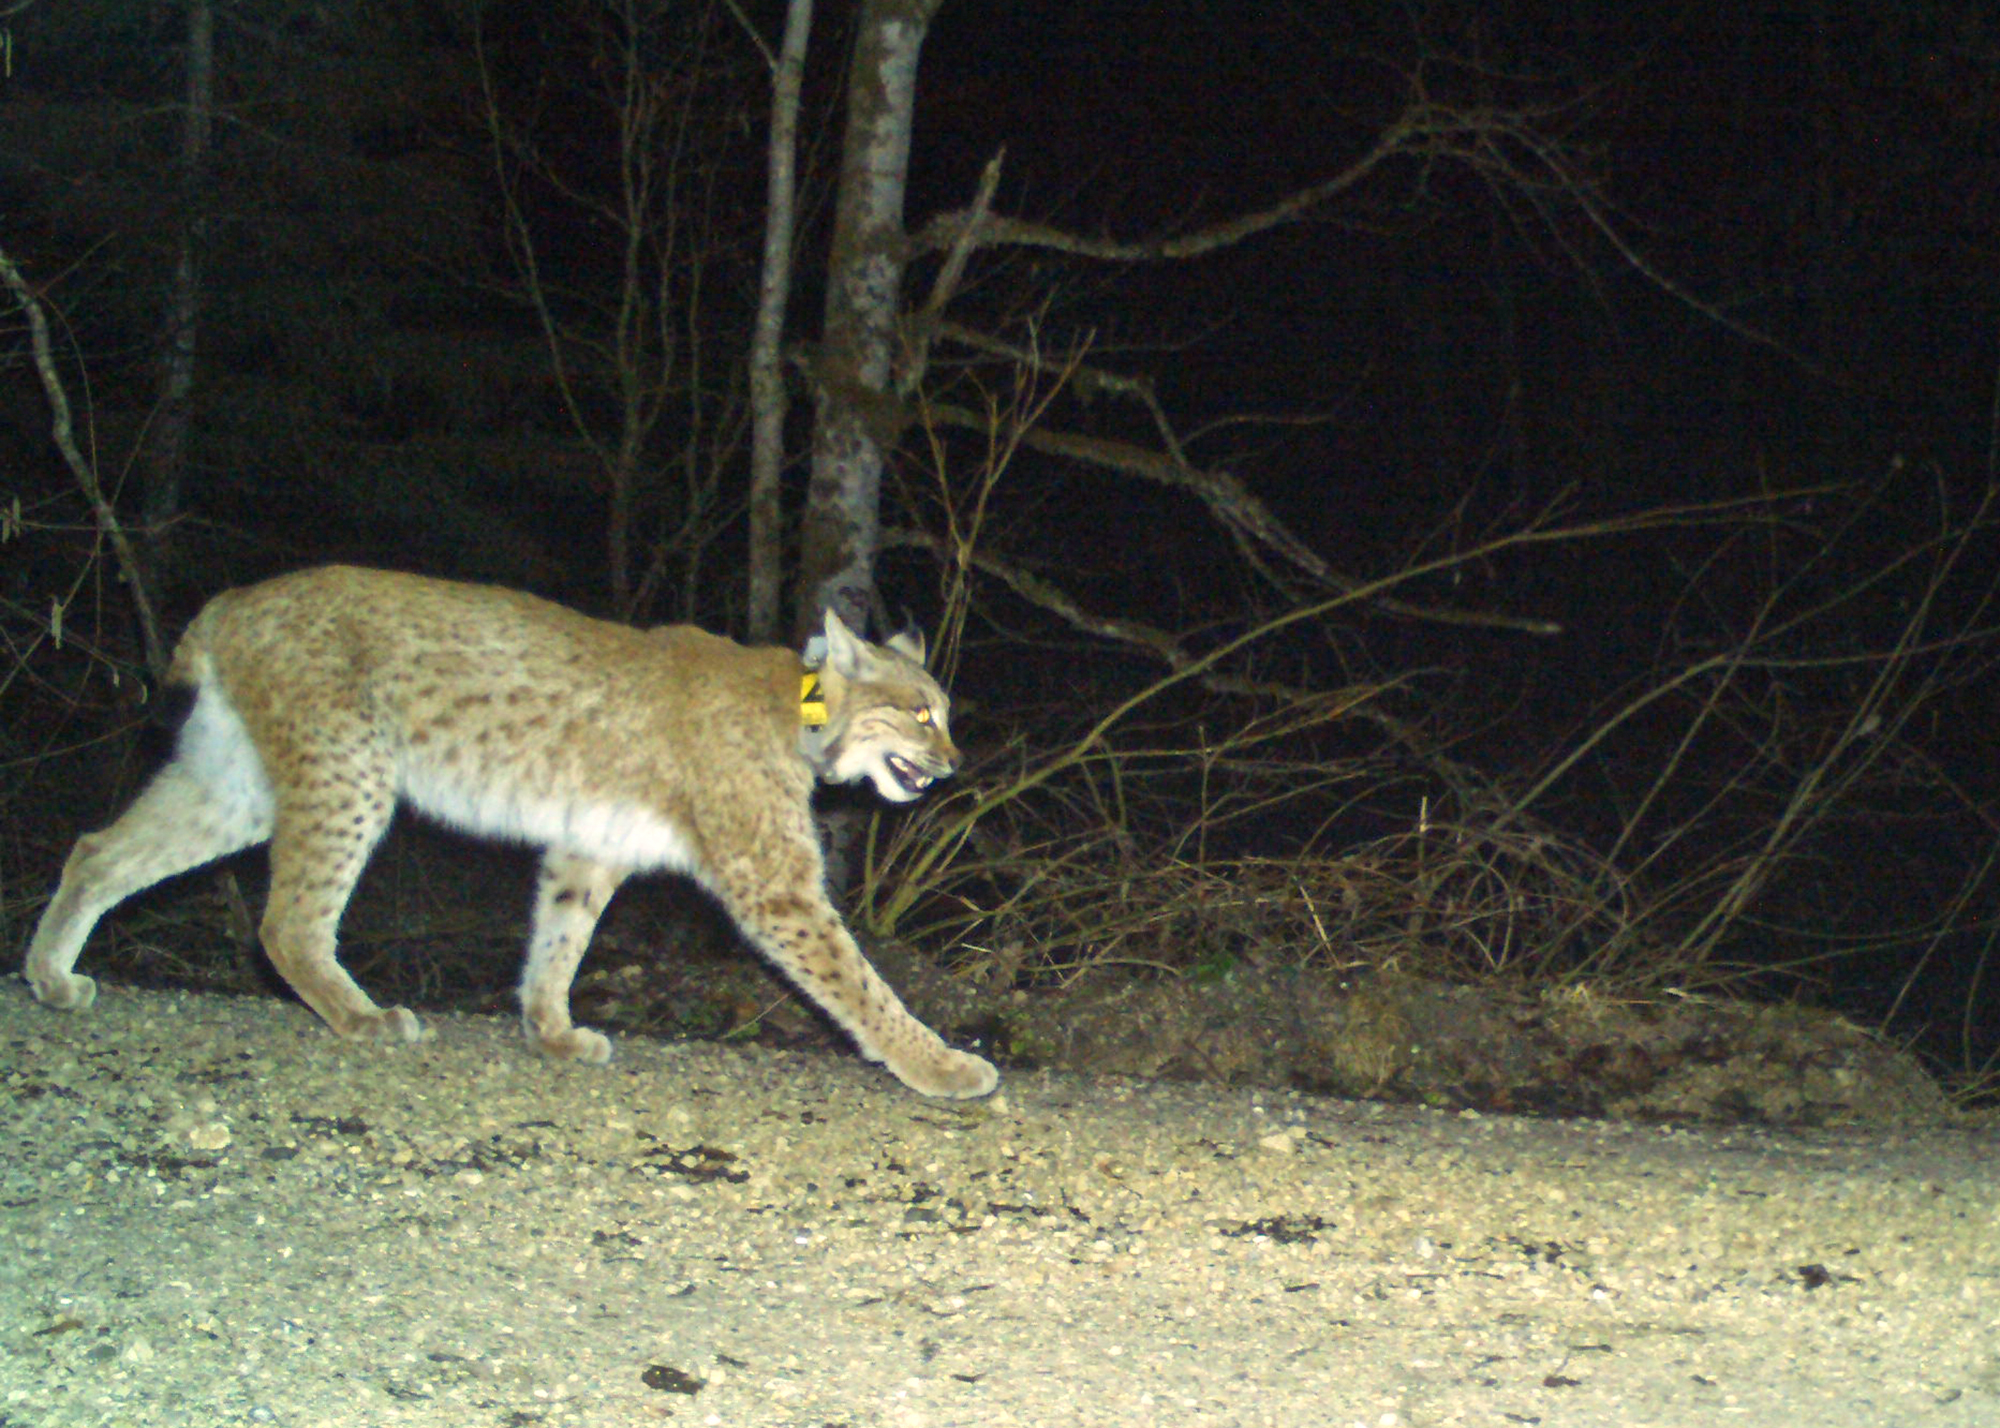 Night-time photo trap image shows lynx Norik